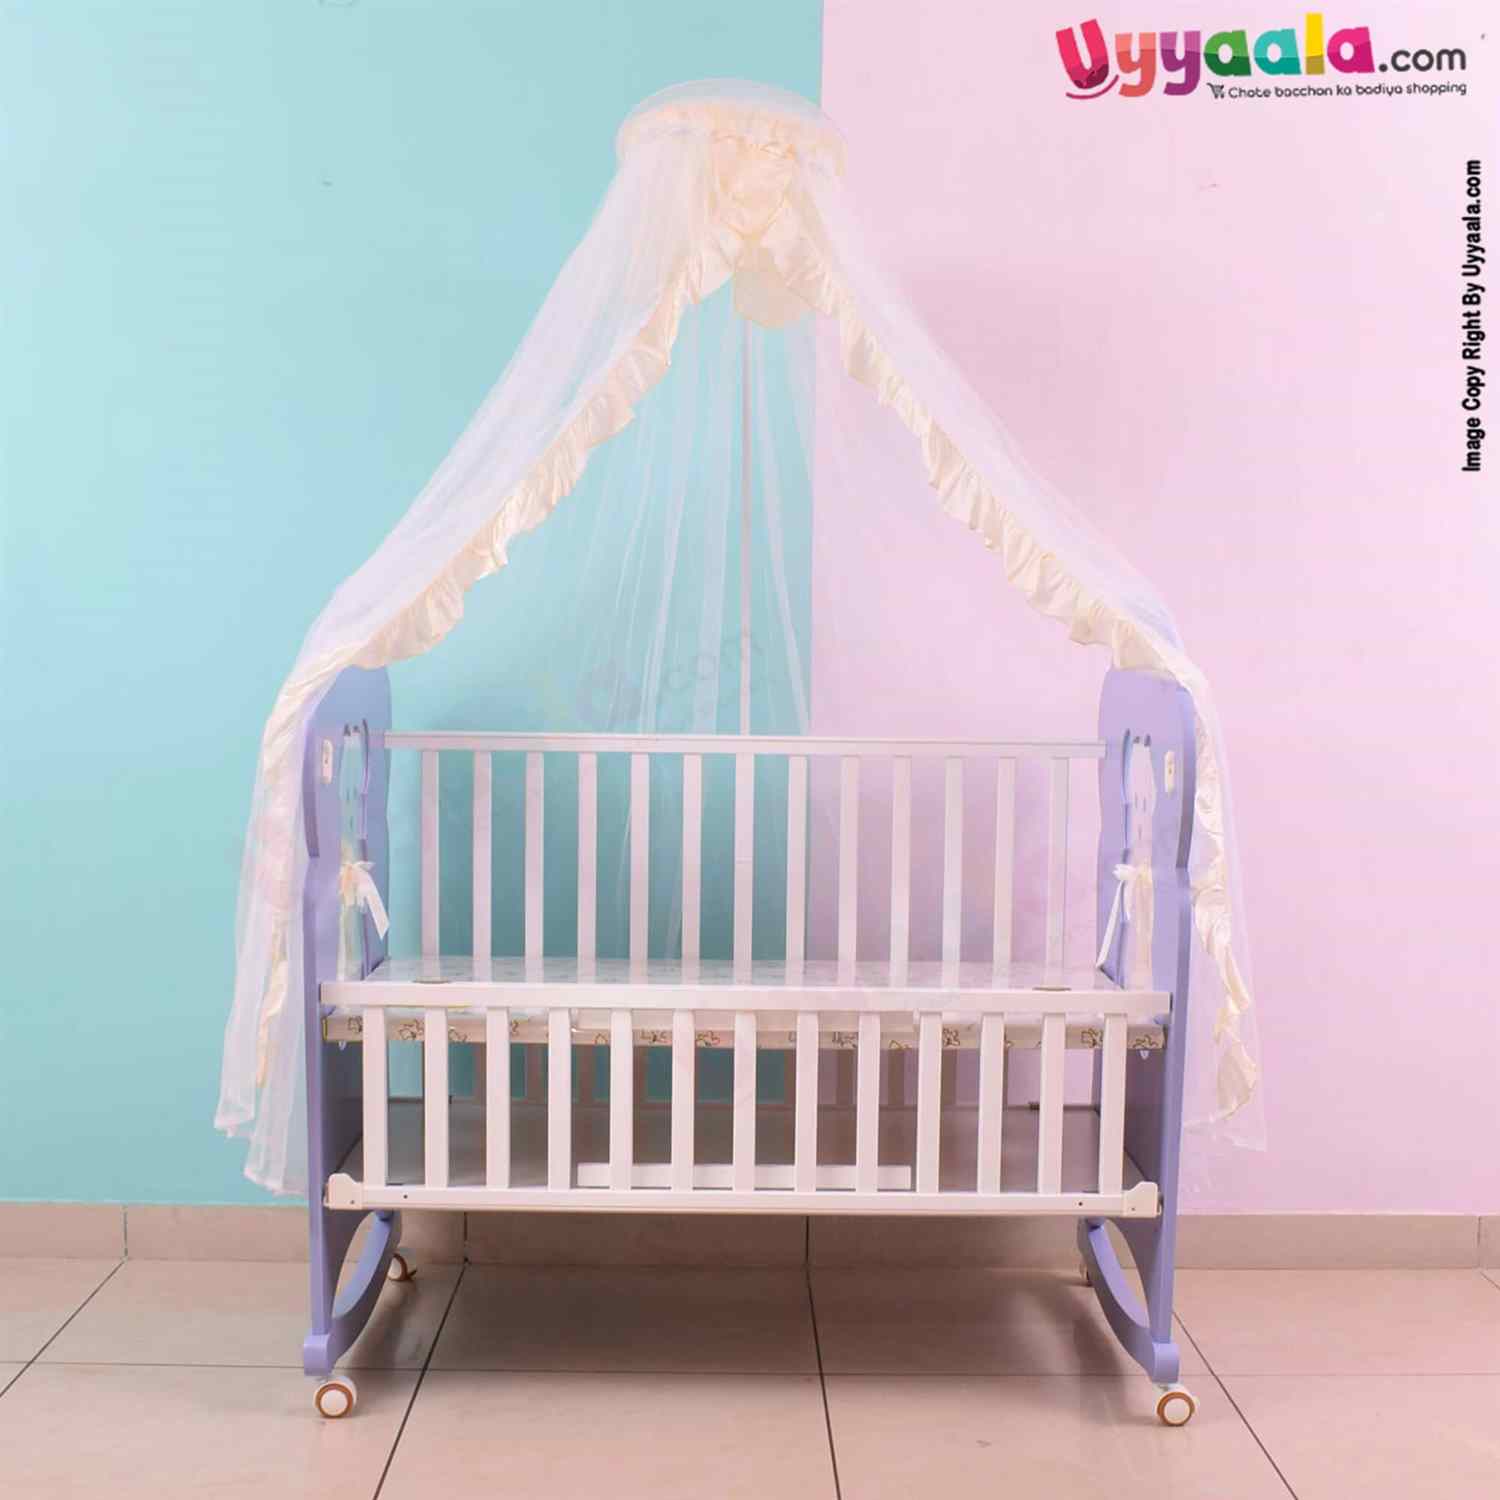 Premium Baby Cradle Cot & Rocker with Canopy Mosquito Net 0+m Age, Purple-White